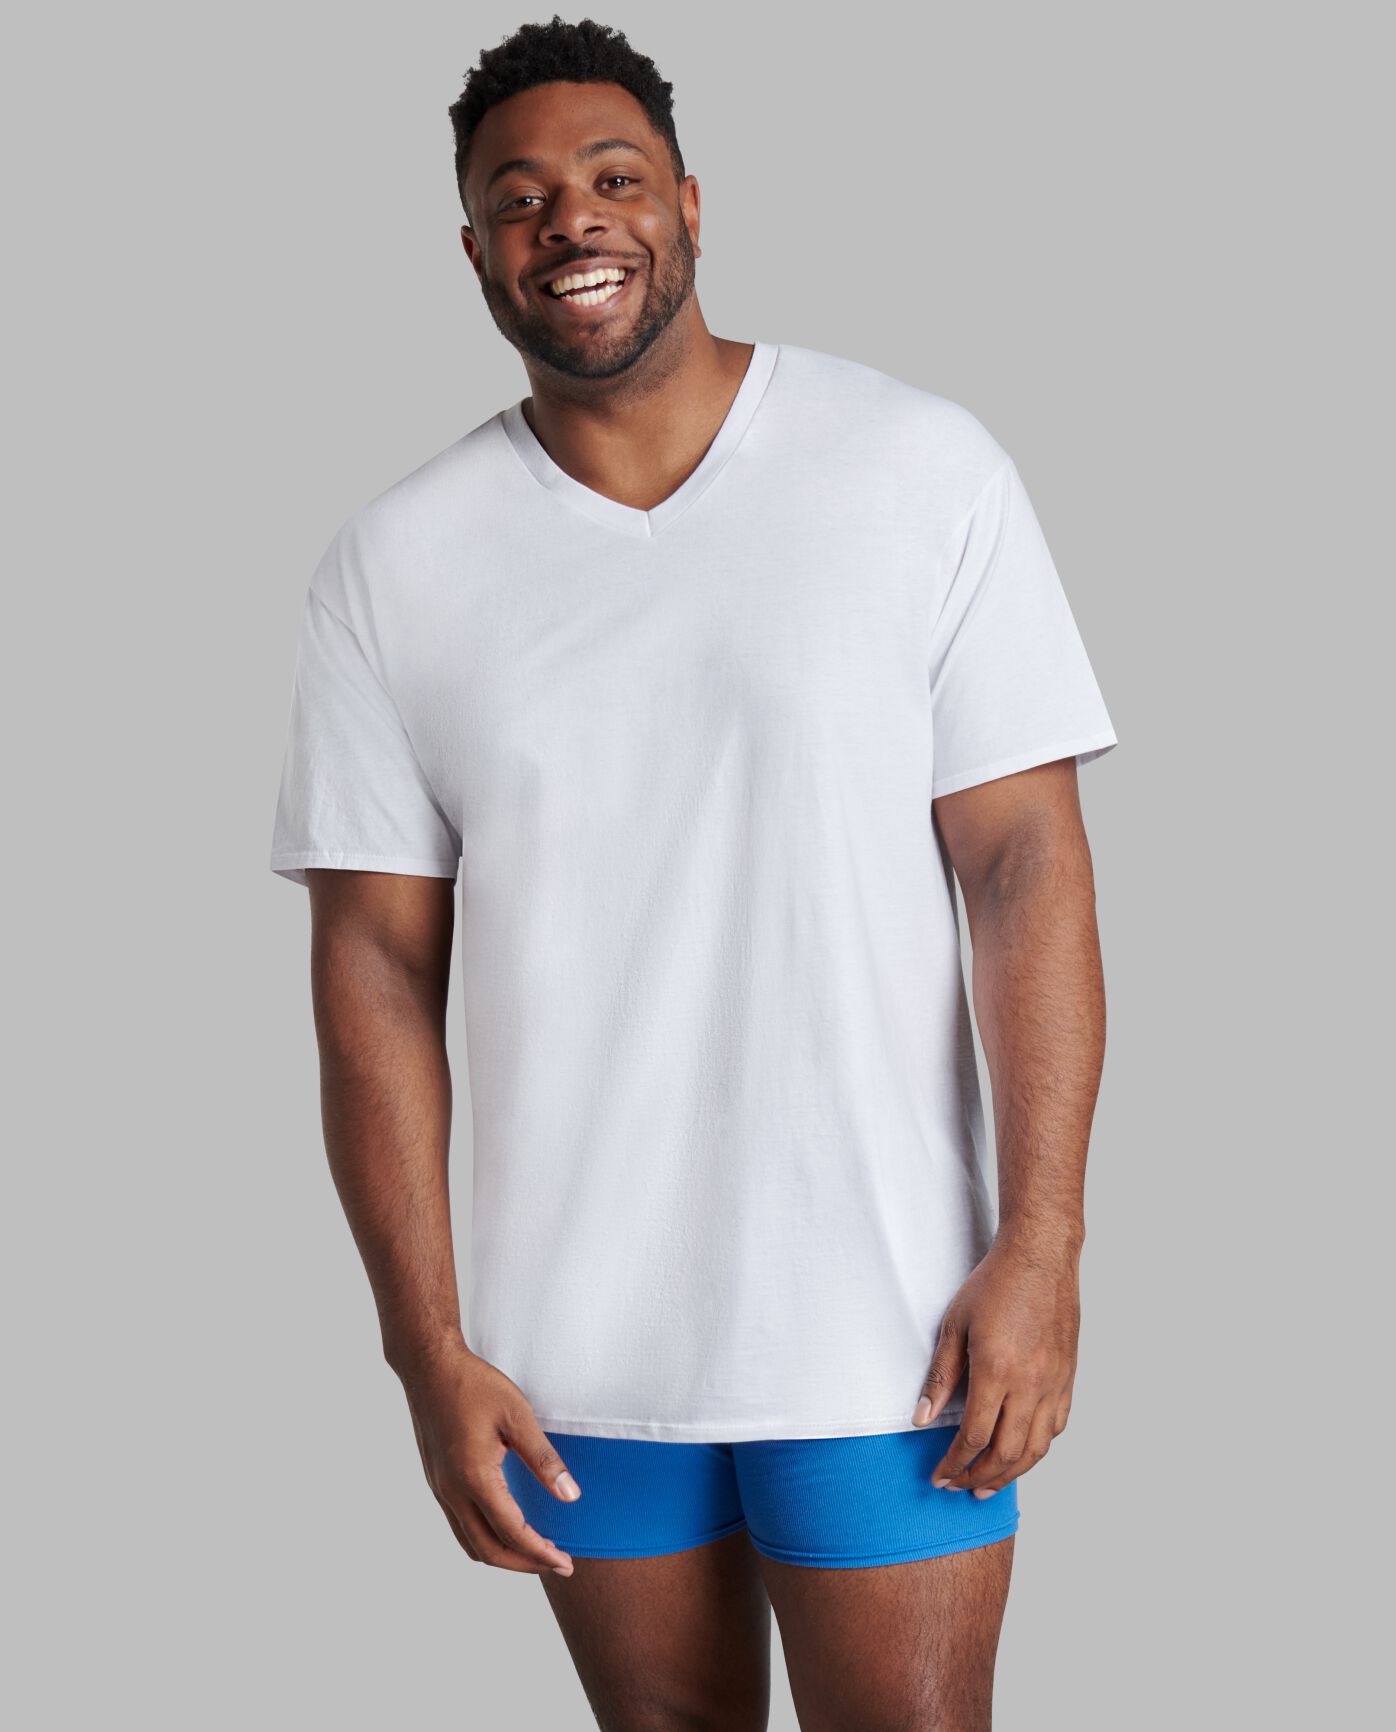 Melbourne zelfstandig naamwoord type Tall Men's Classic White V-Neck T-Shirts, 6 Pack